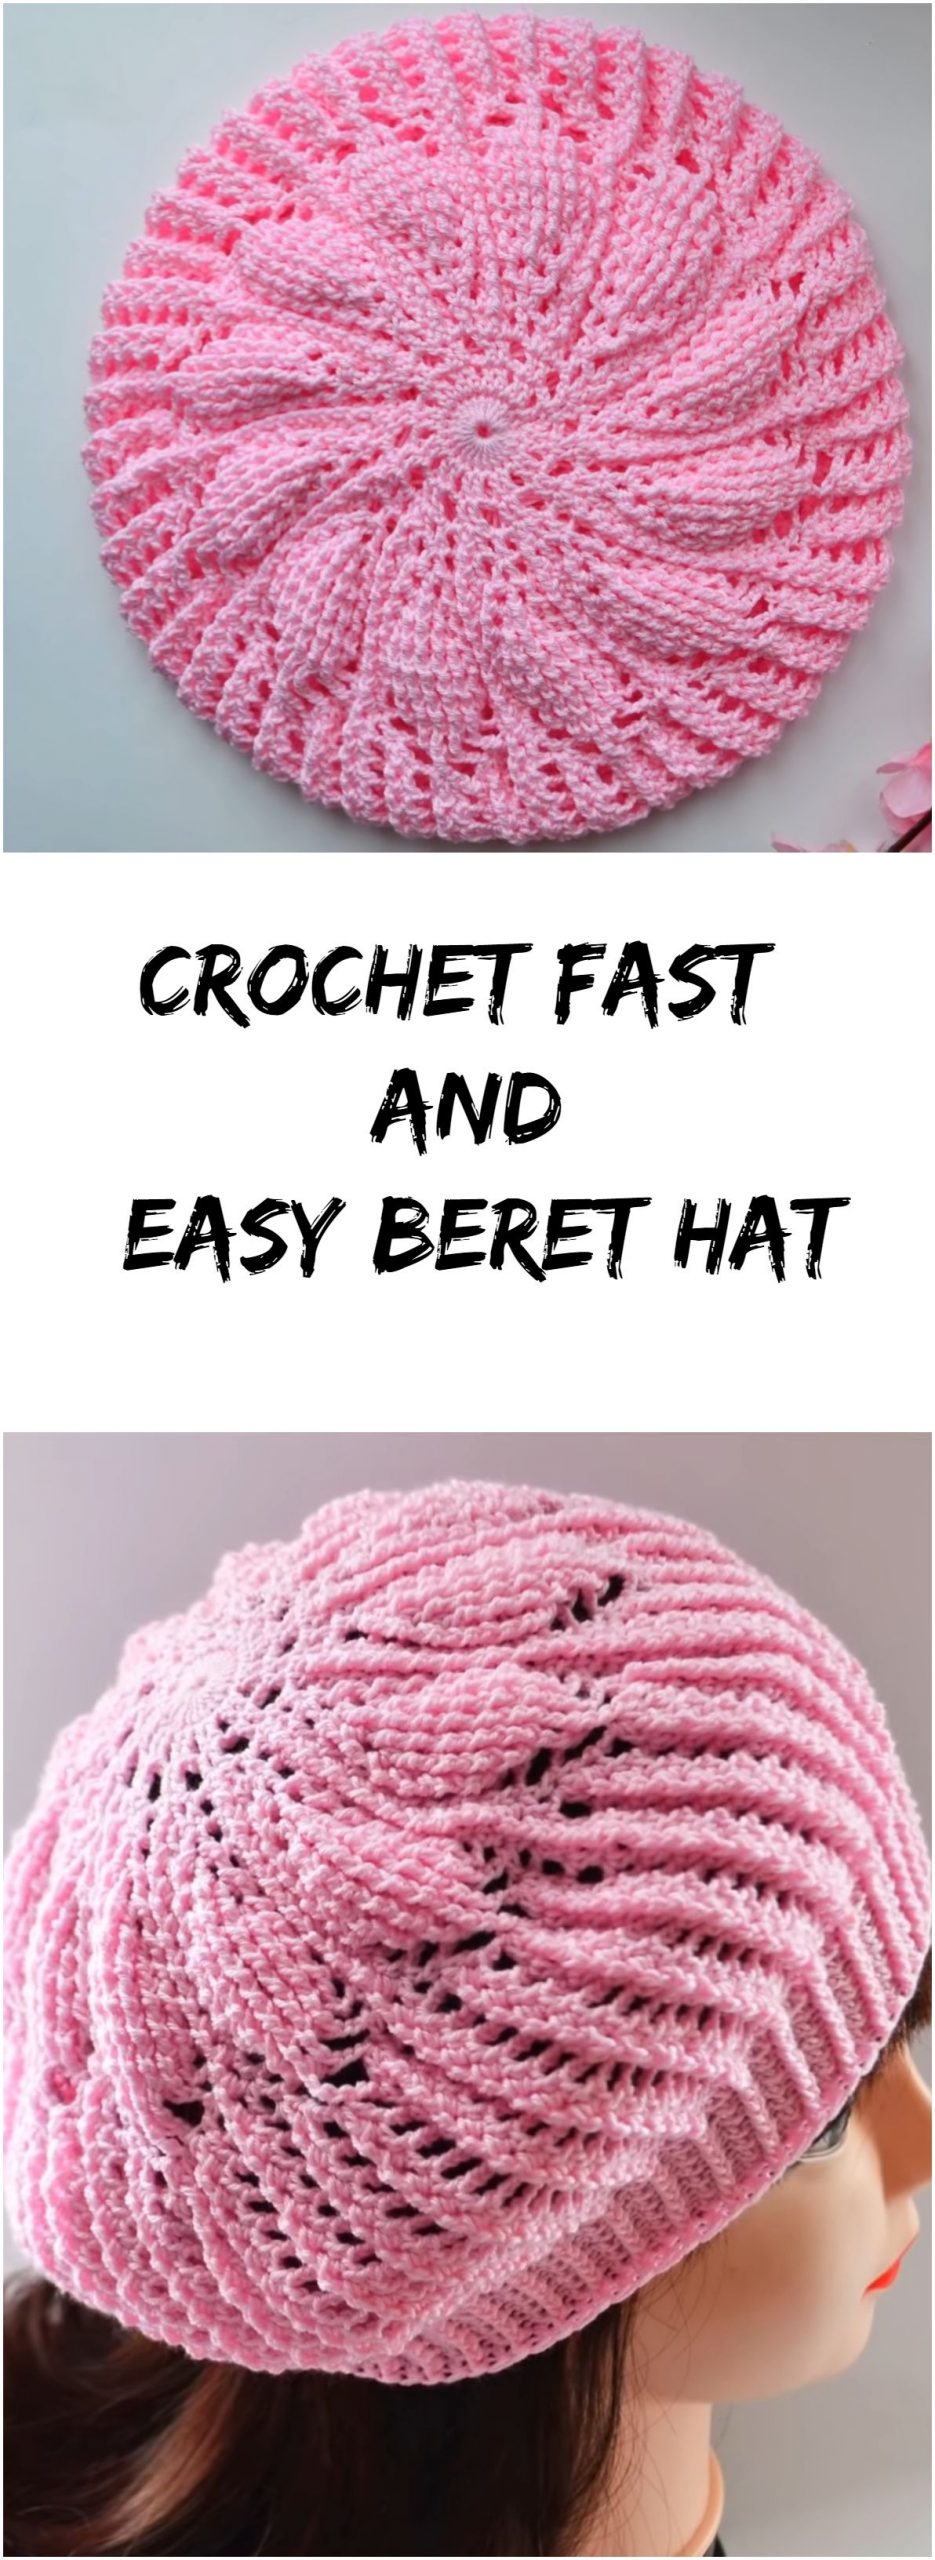 Crochet-Fast-And-Easy-Beret-Hat.jpg